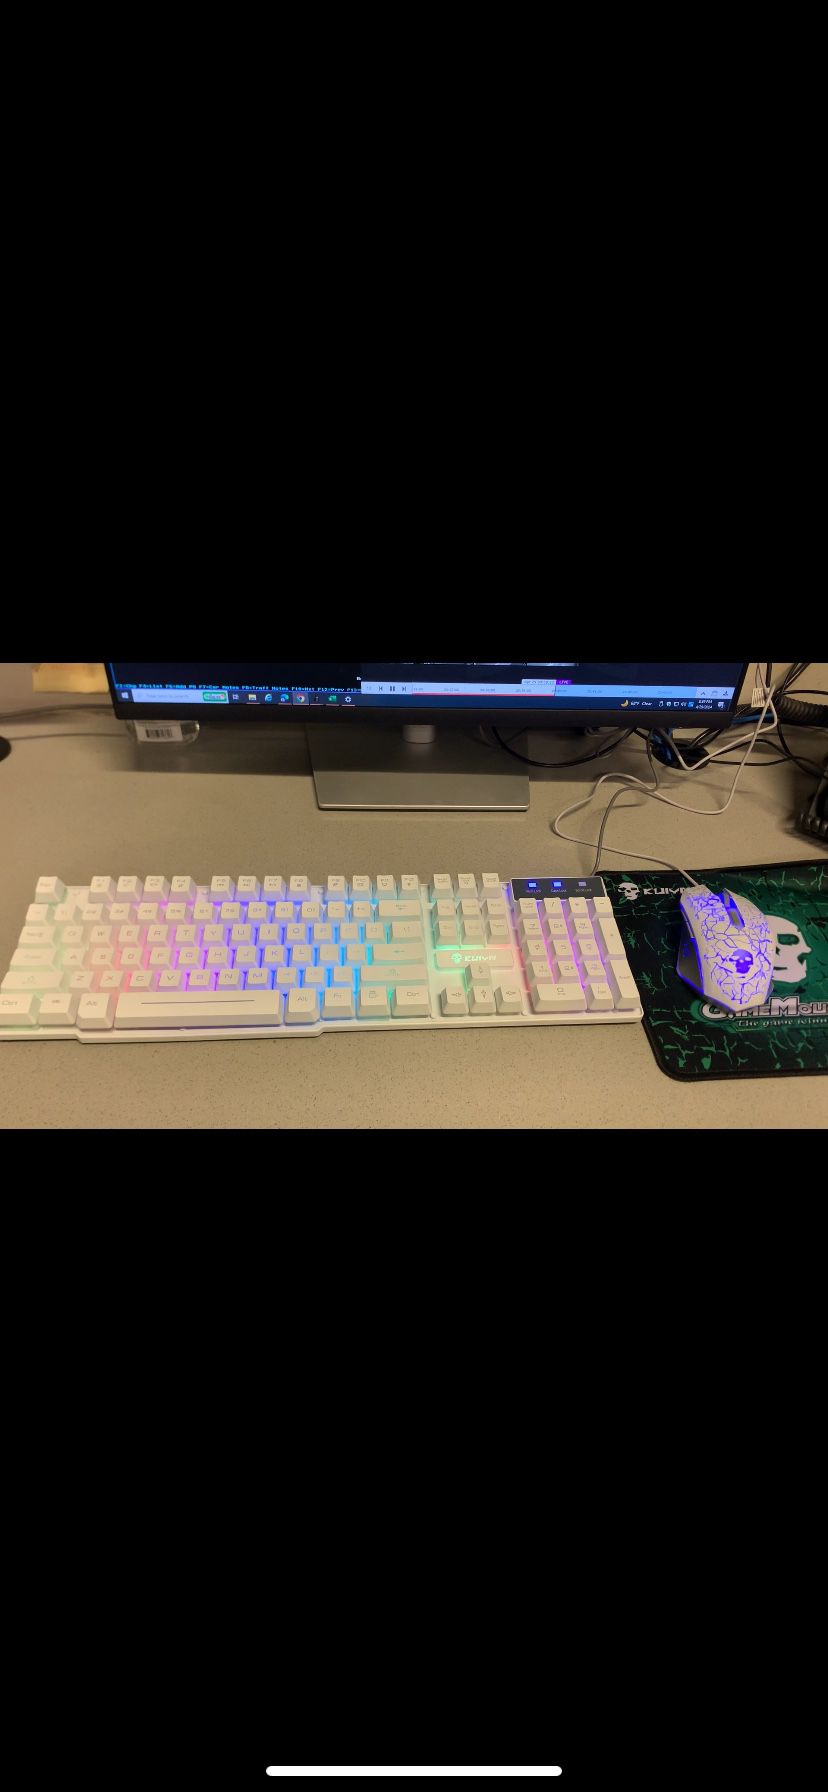 Gaming Keyboard And Mouse Bundle